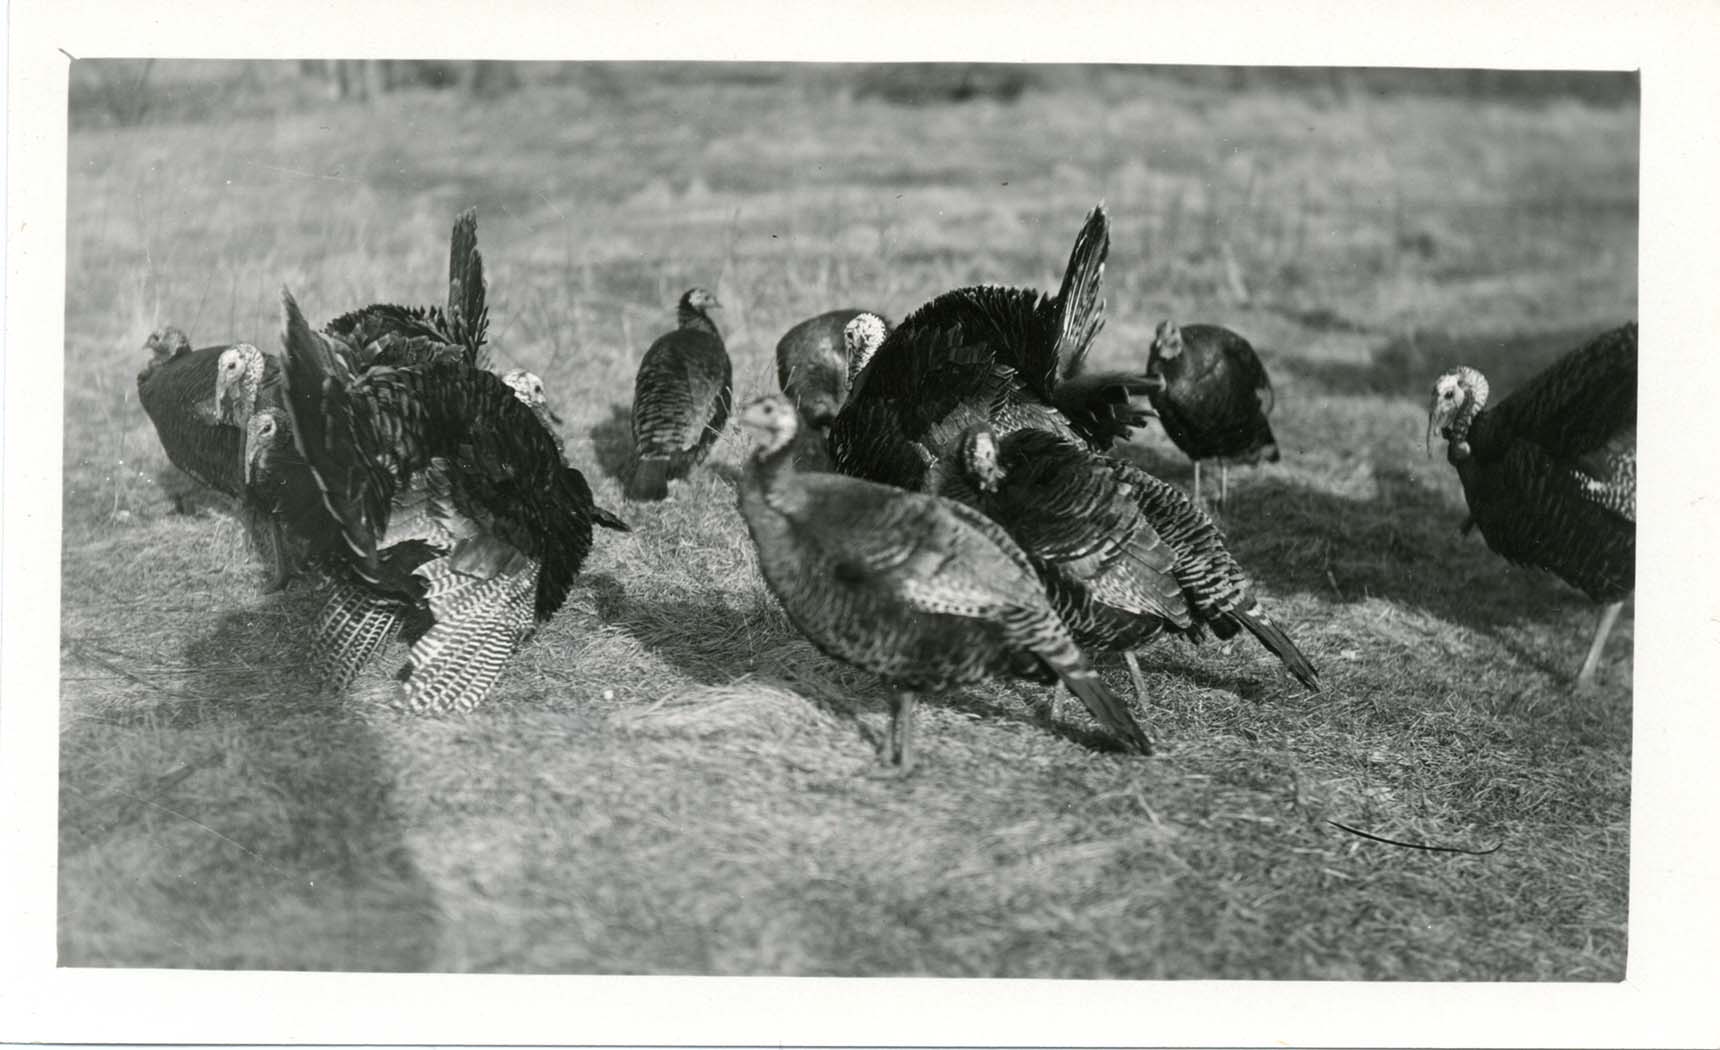 Photograph of a flock of Wild Turkeys